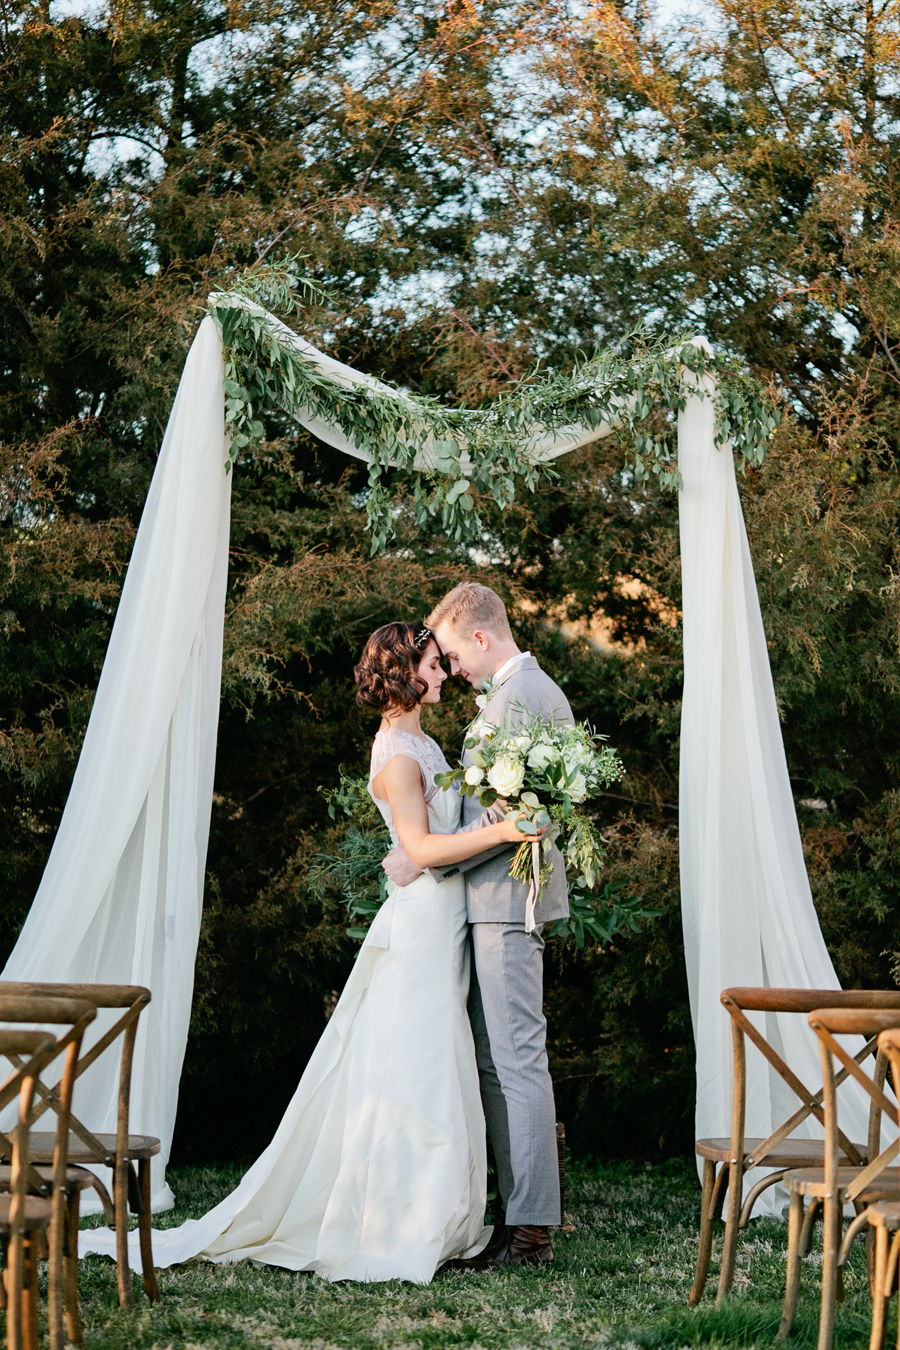 Simple Wedding Arbor With Greenery Elizabeth Anne Designs The